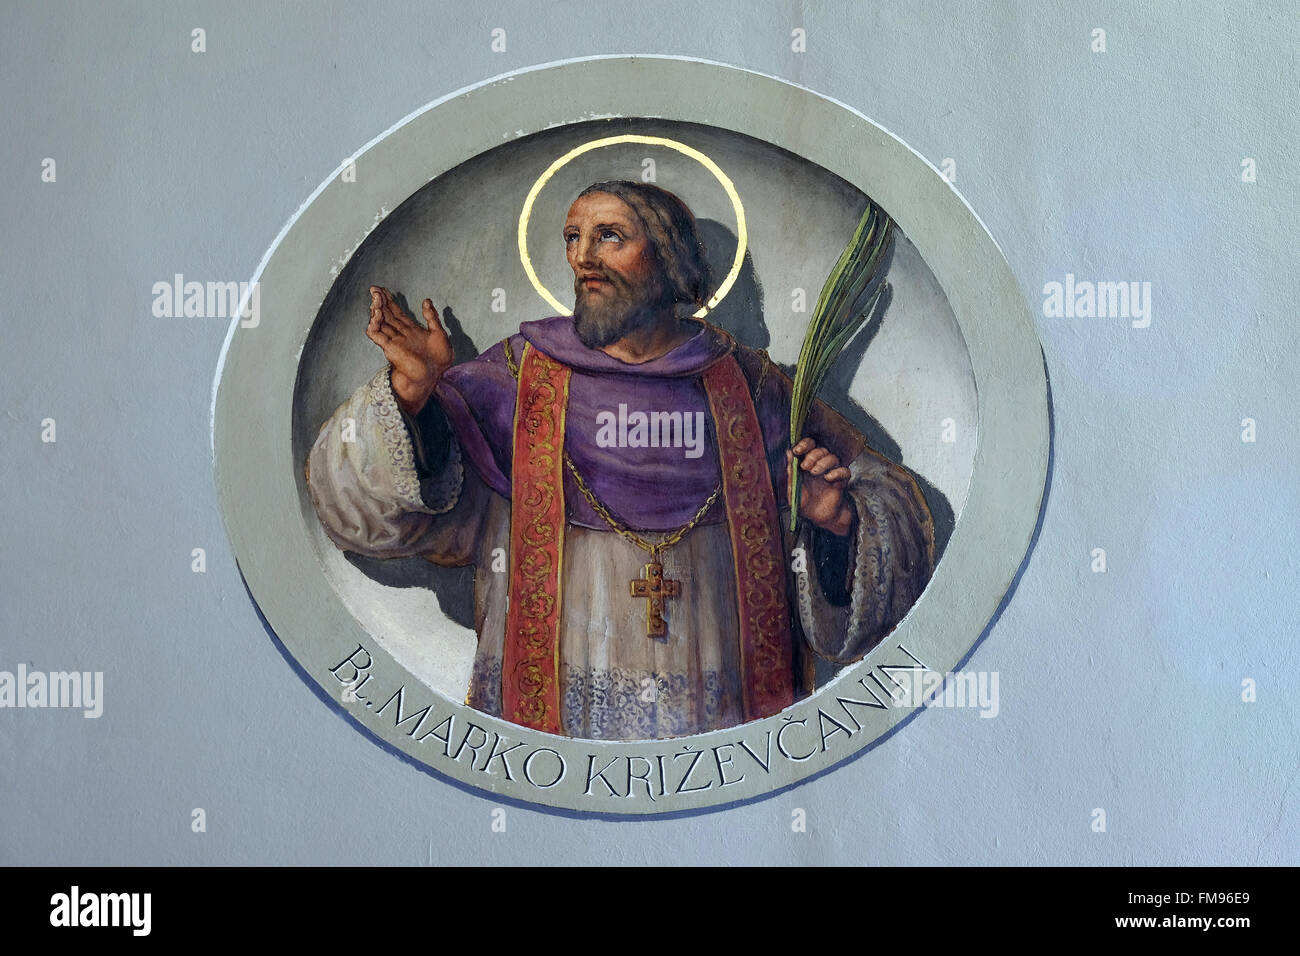 Saint Marko Krizin, fresco in the Basilica of the Sacred Heart of Jesus in Zagreb, Croatia Stock Photo